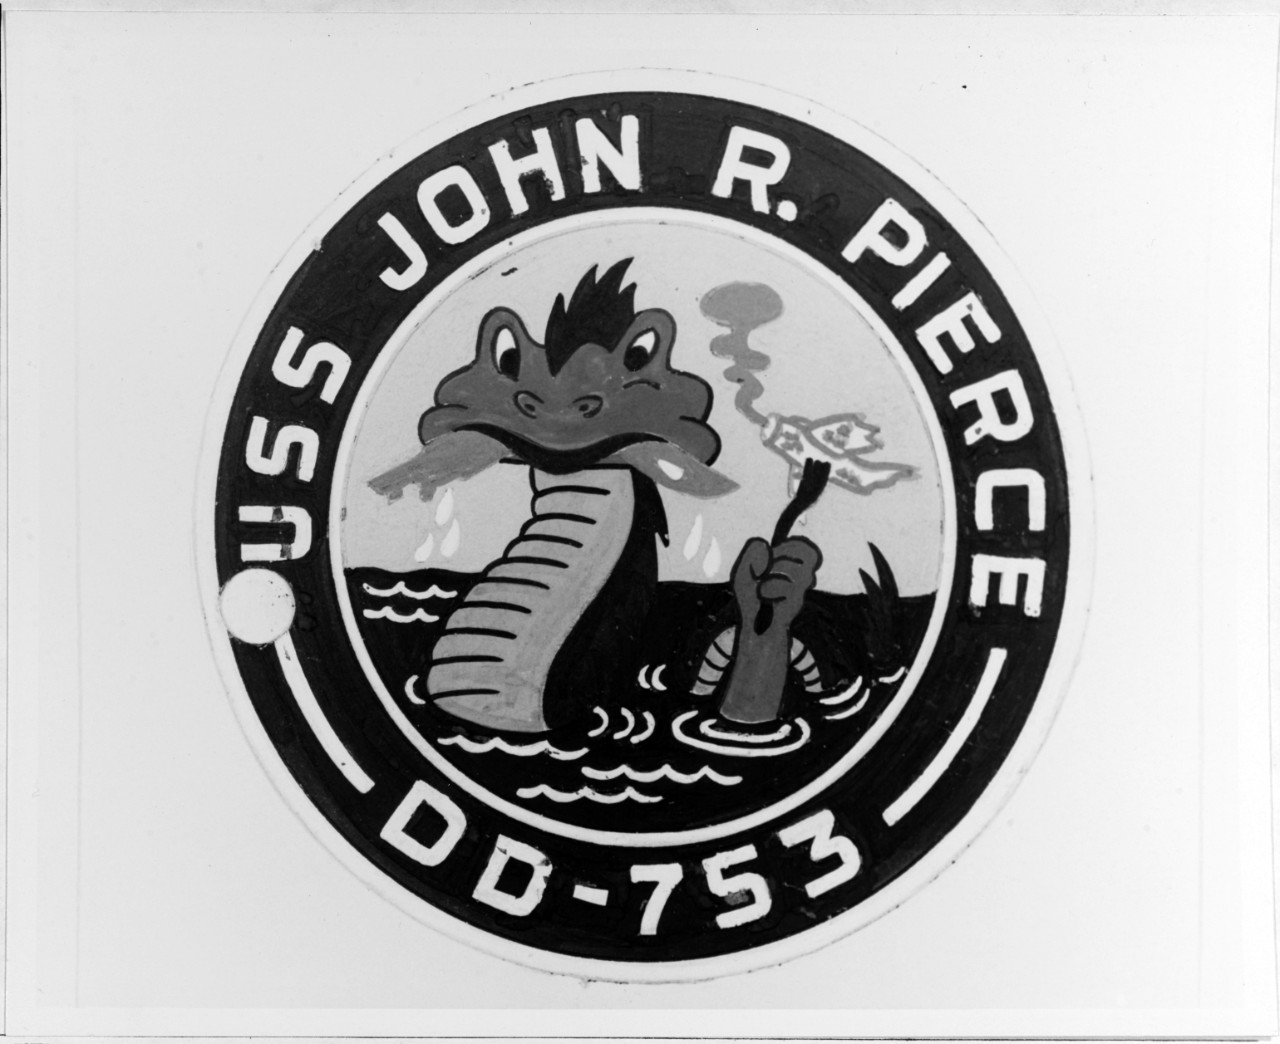 Insignia: USS JOHN R. PIERCE (DD-753)